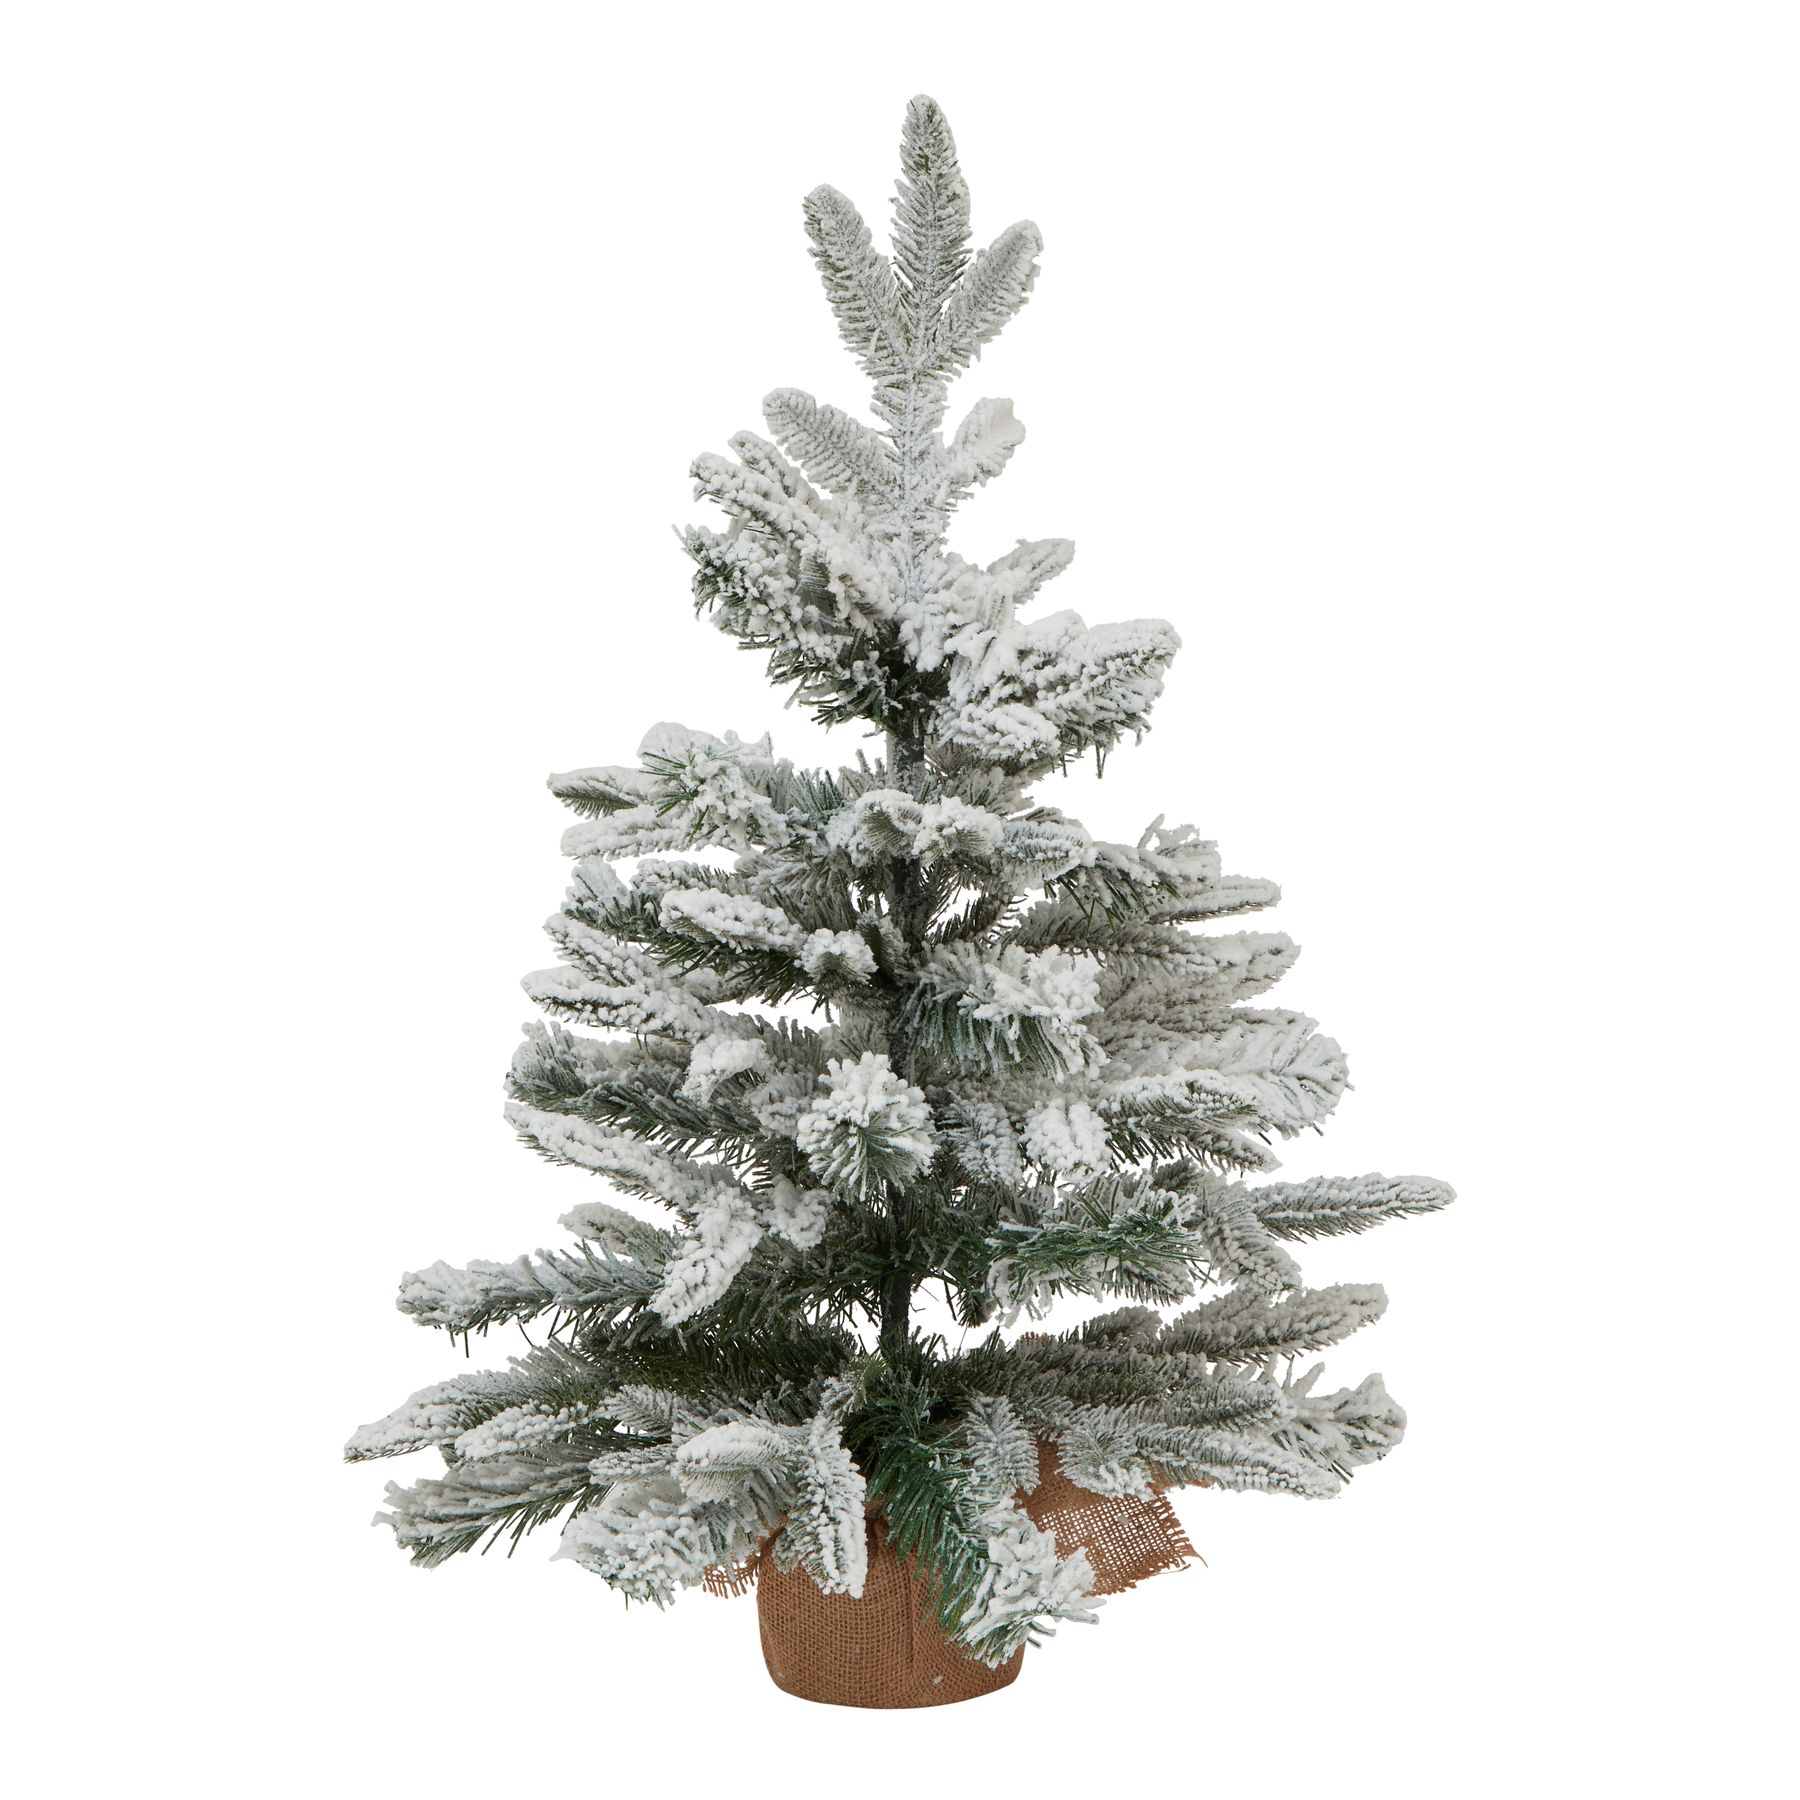 Medium Snowy Spruce Tree - Image 1